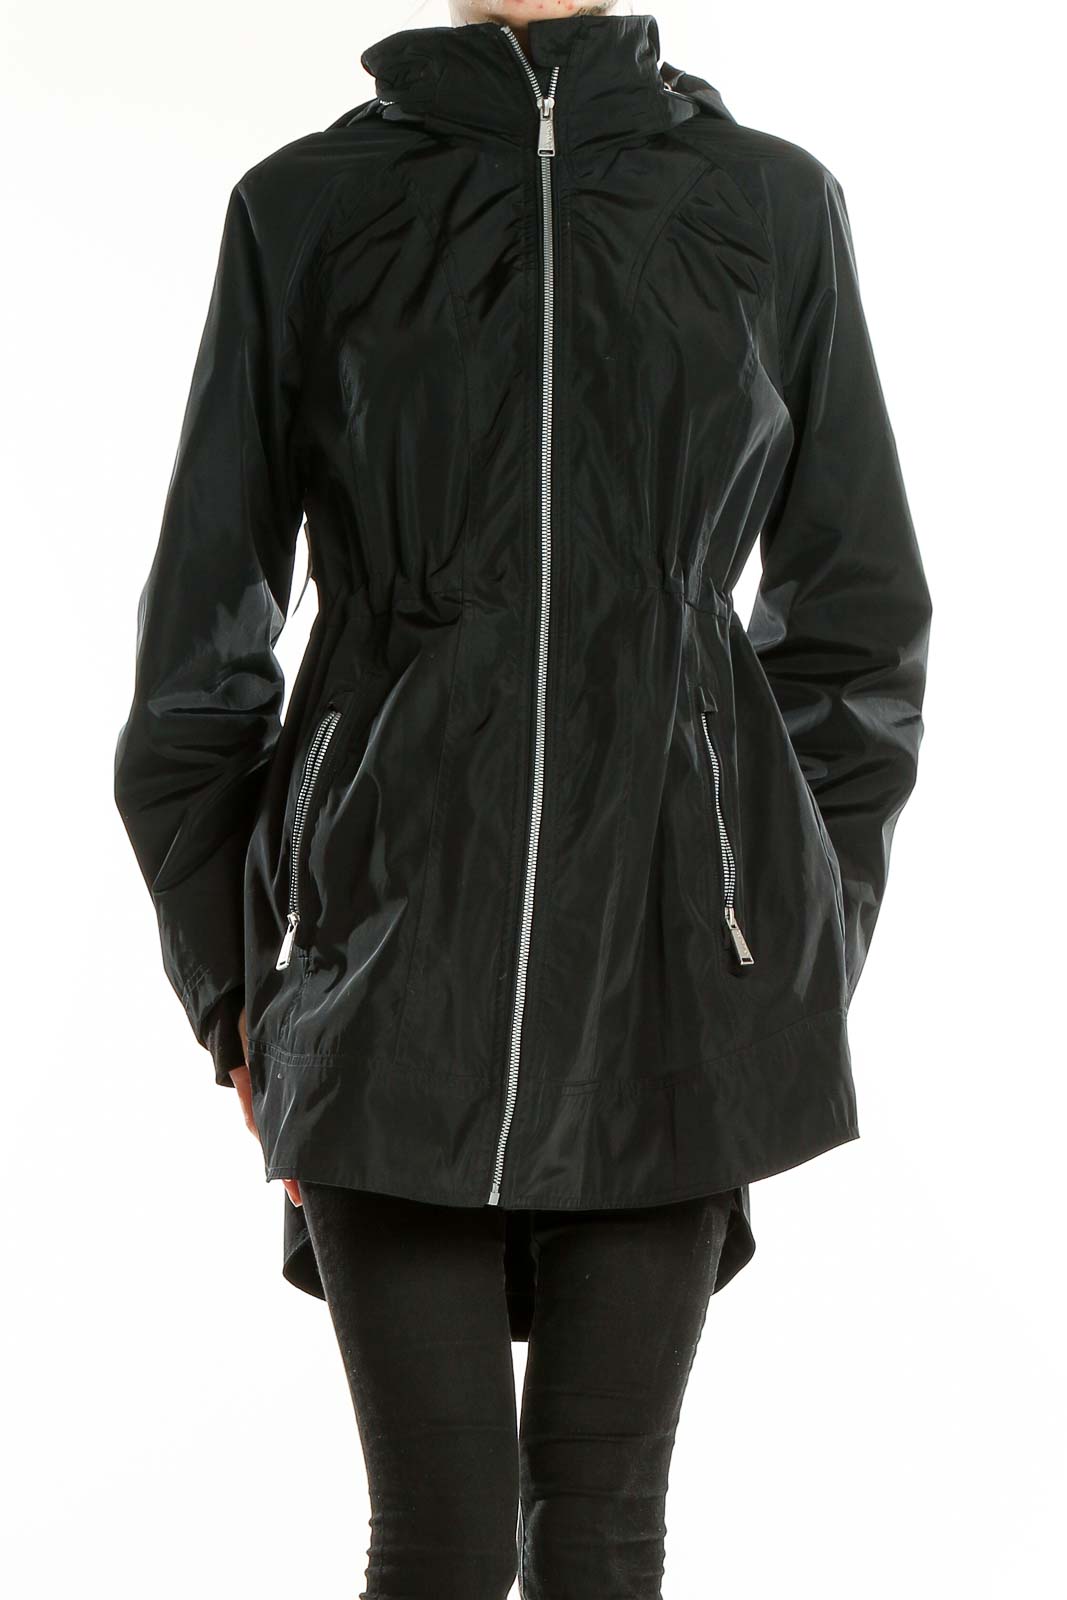 Black Rain Jacket Front